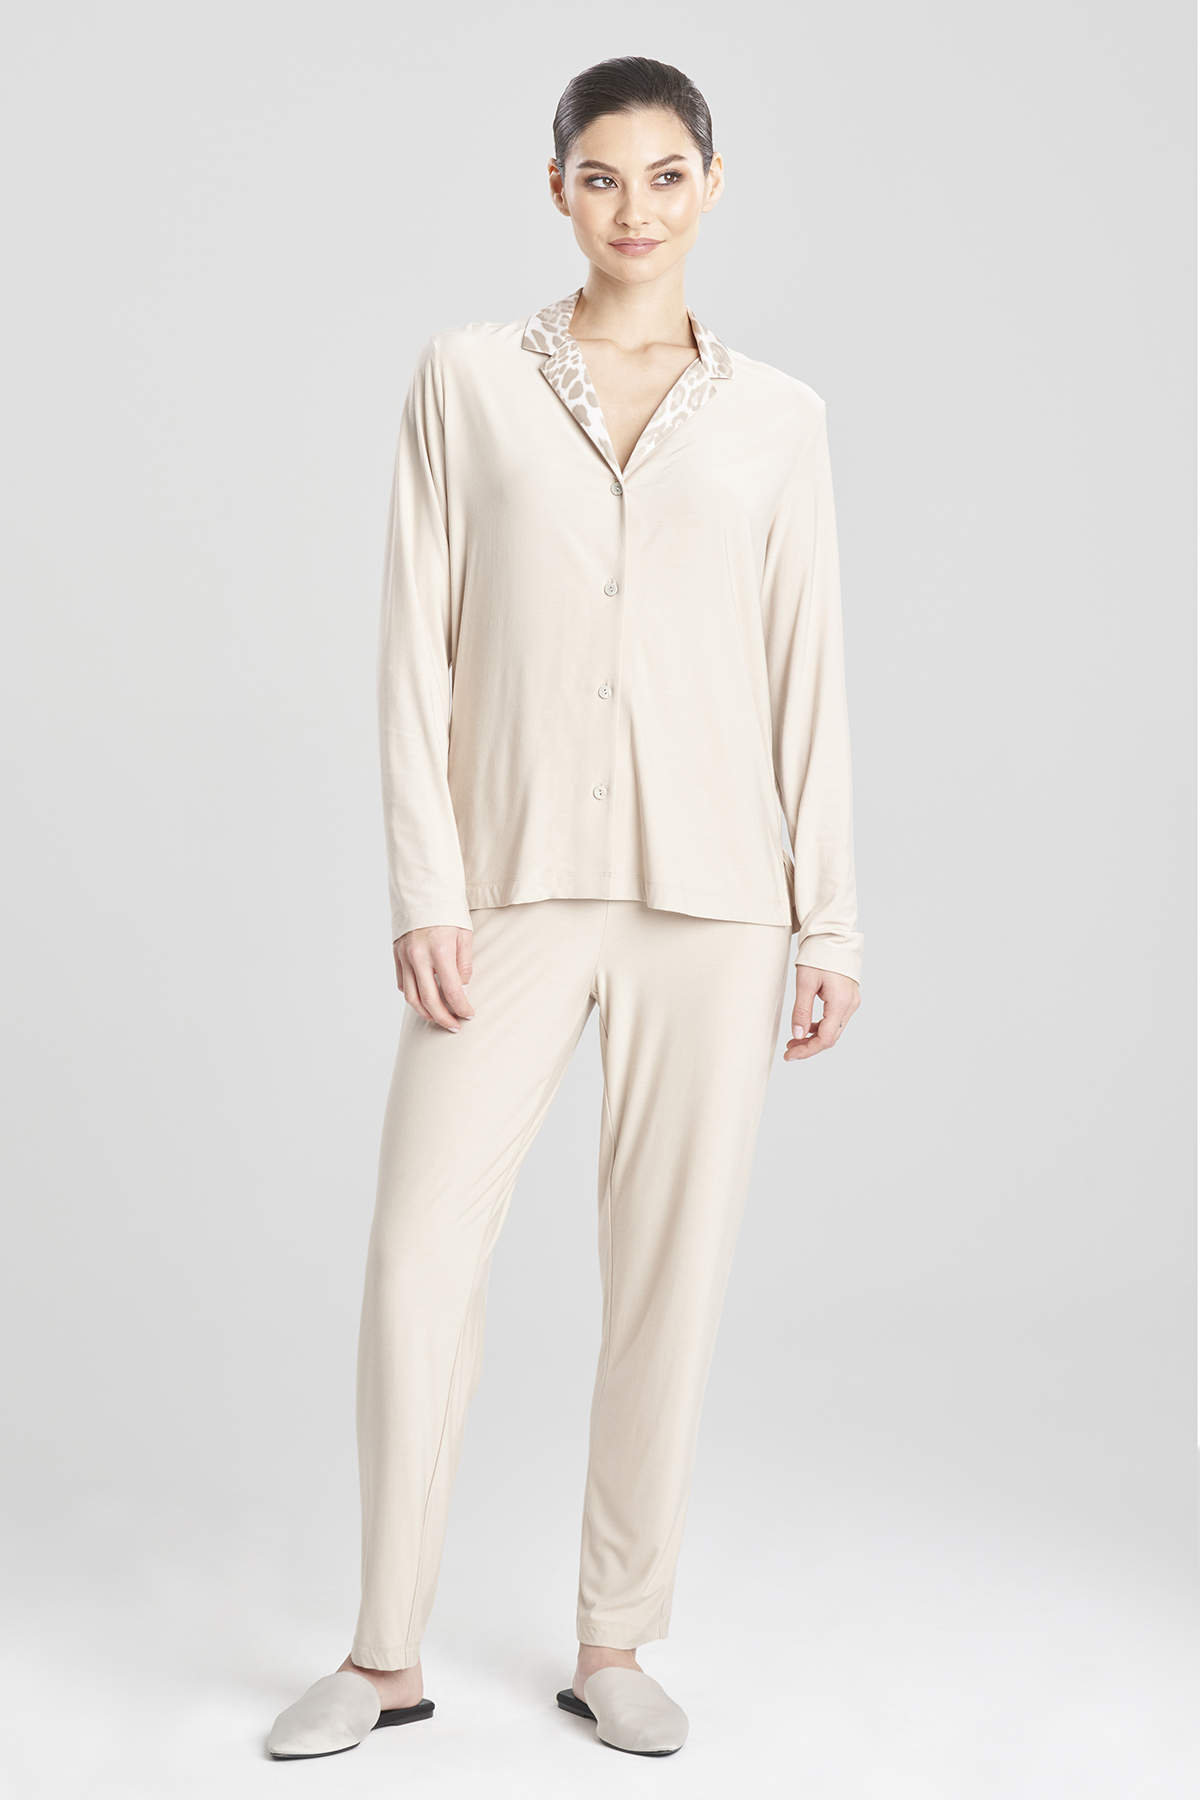 Buy Ryu Jacquard Mandarin PJ and Pajamas - Shop Natori Online